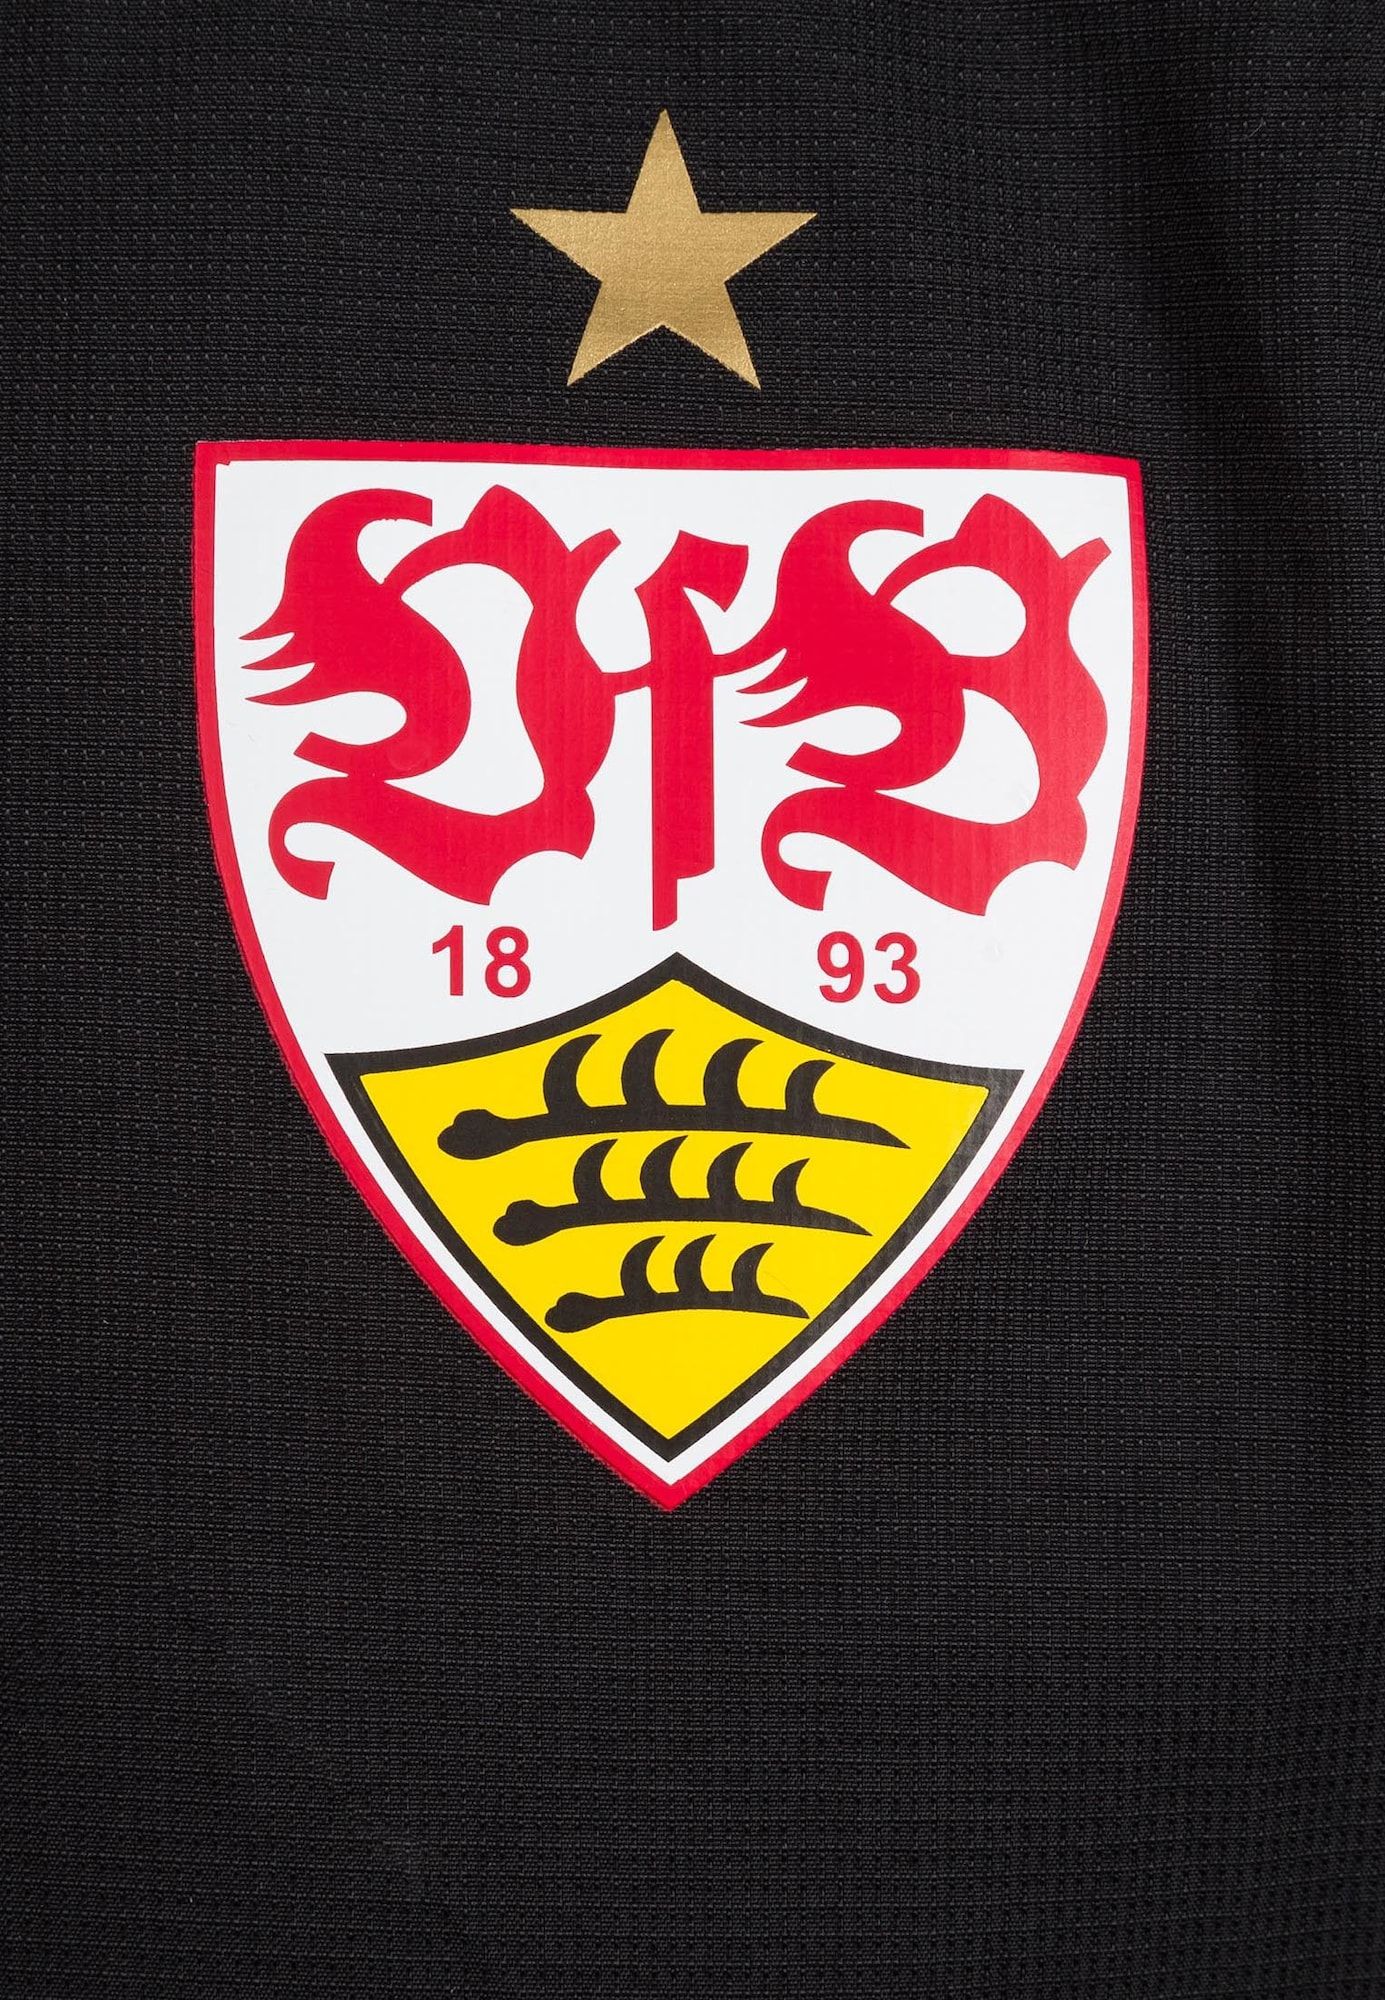  VfB Stuttgart Hintergrundbild 1385x2000. PUMA Online Shop ABOUT YOU. Vfb stuttgart, Vfb stuttgart logo, Vfb